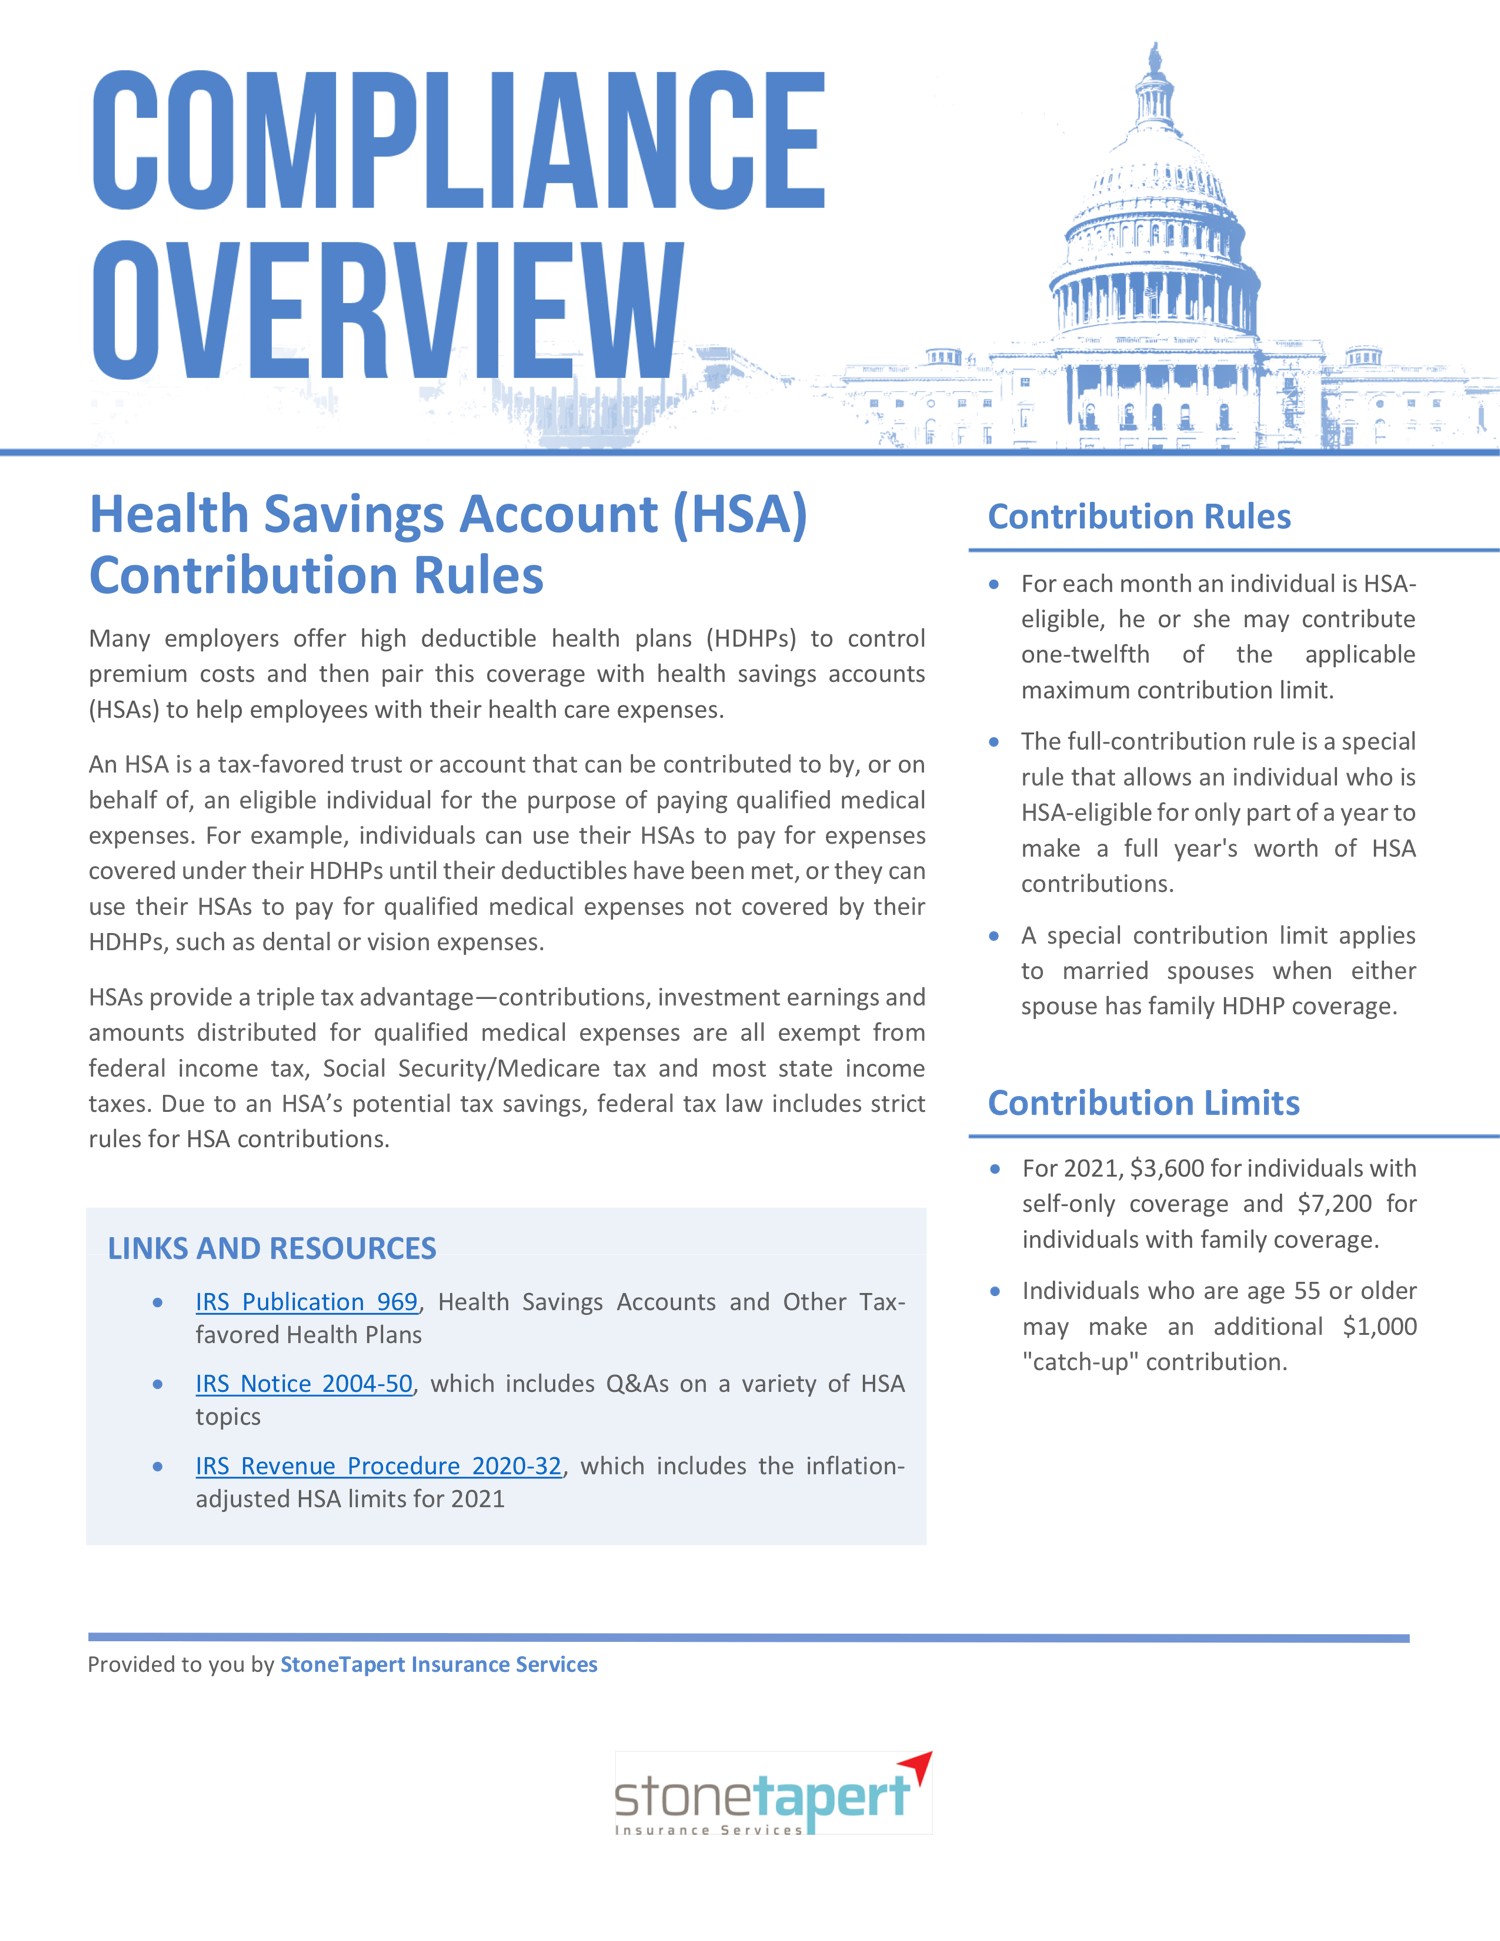 https://www.stonetapert.com/wp-content/uploads/2021/03/123862-Health-Savings-Account-HSA-Contribution-Rules-1-21-21.png